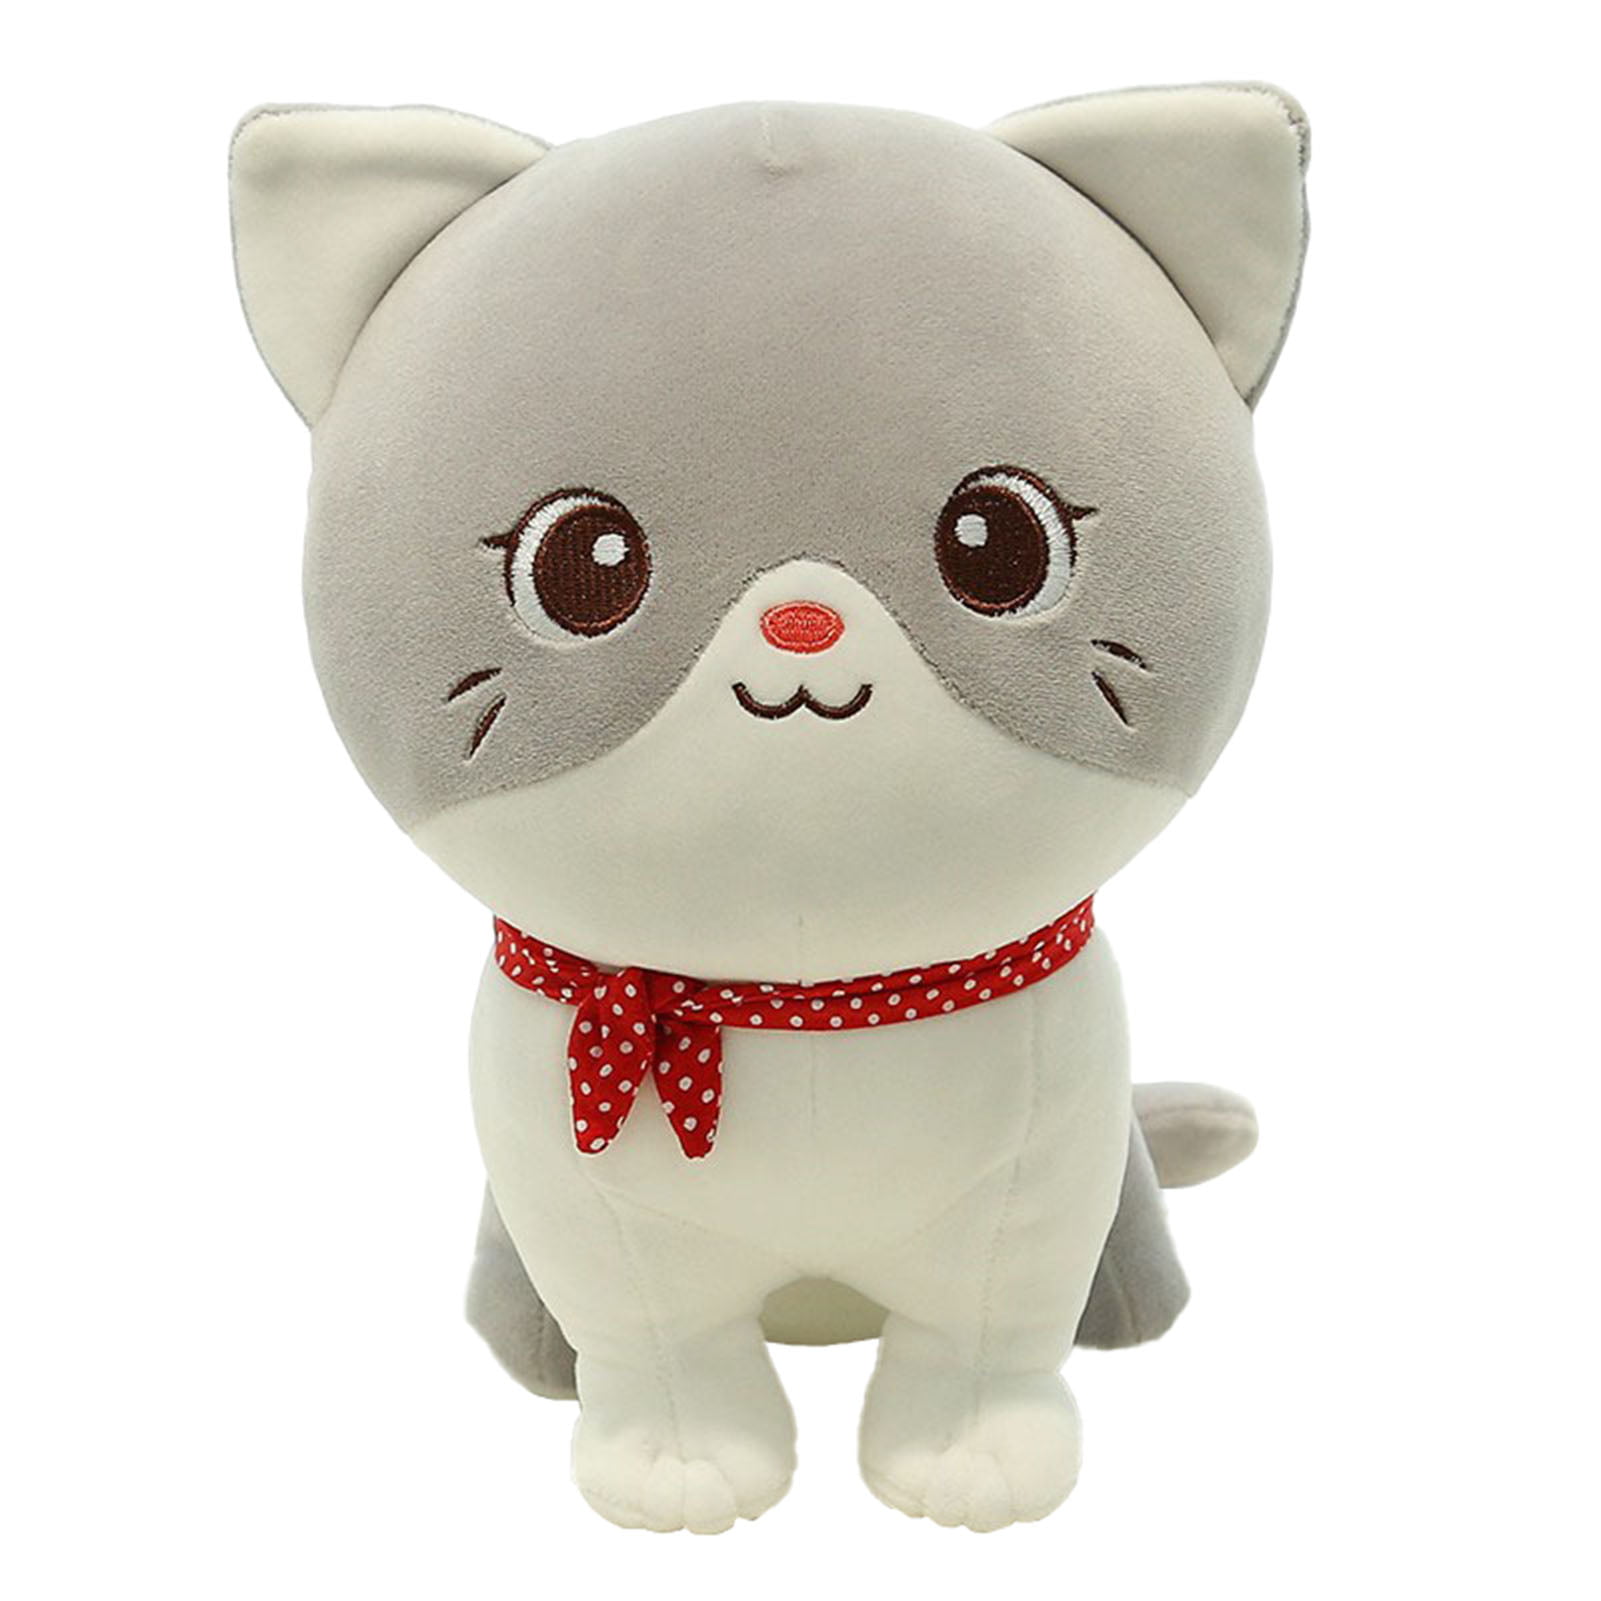 Animated Stuffed Animal Model Cat Kitten Plush Figure Toy Gifts Home Decor YI 